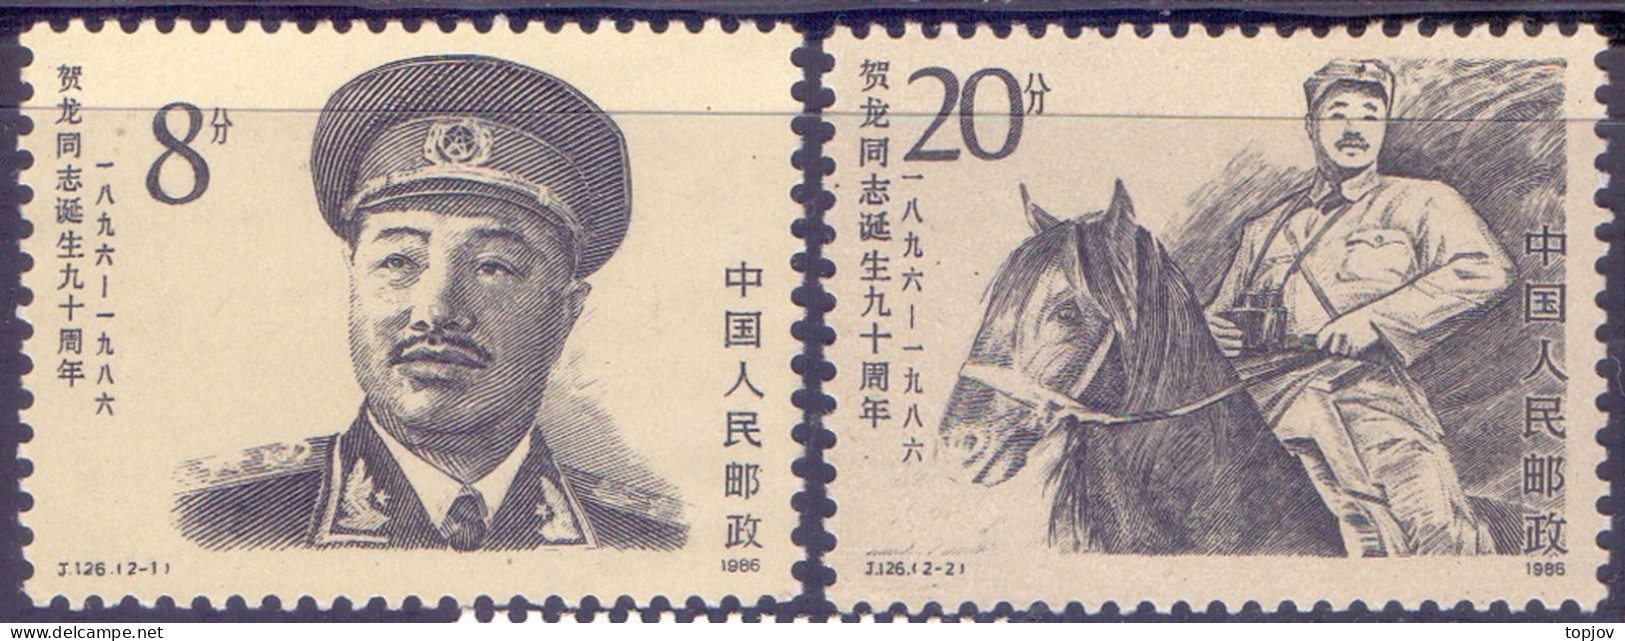 CHINA -  HE LONG - HORSE J.126 - **MNH - 1986 - Gru & Uccelli Trampolieri